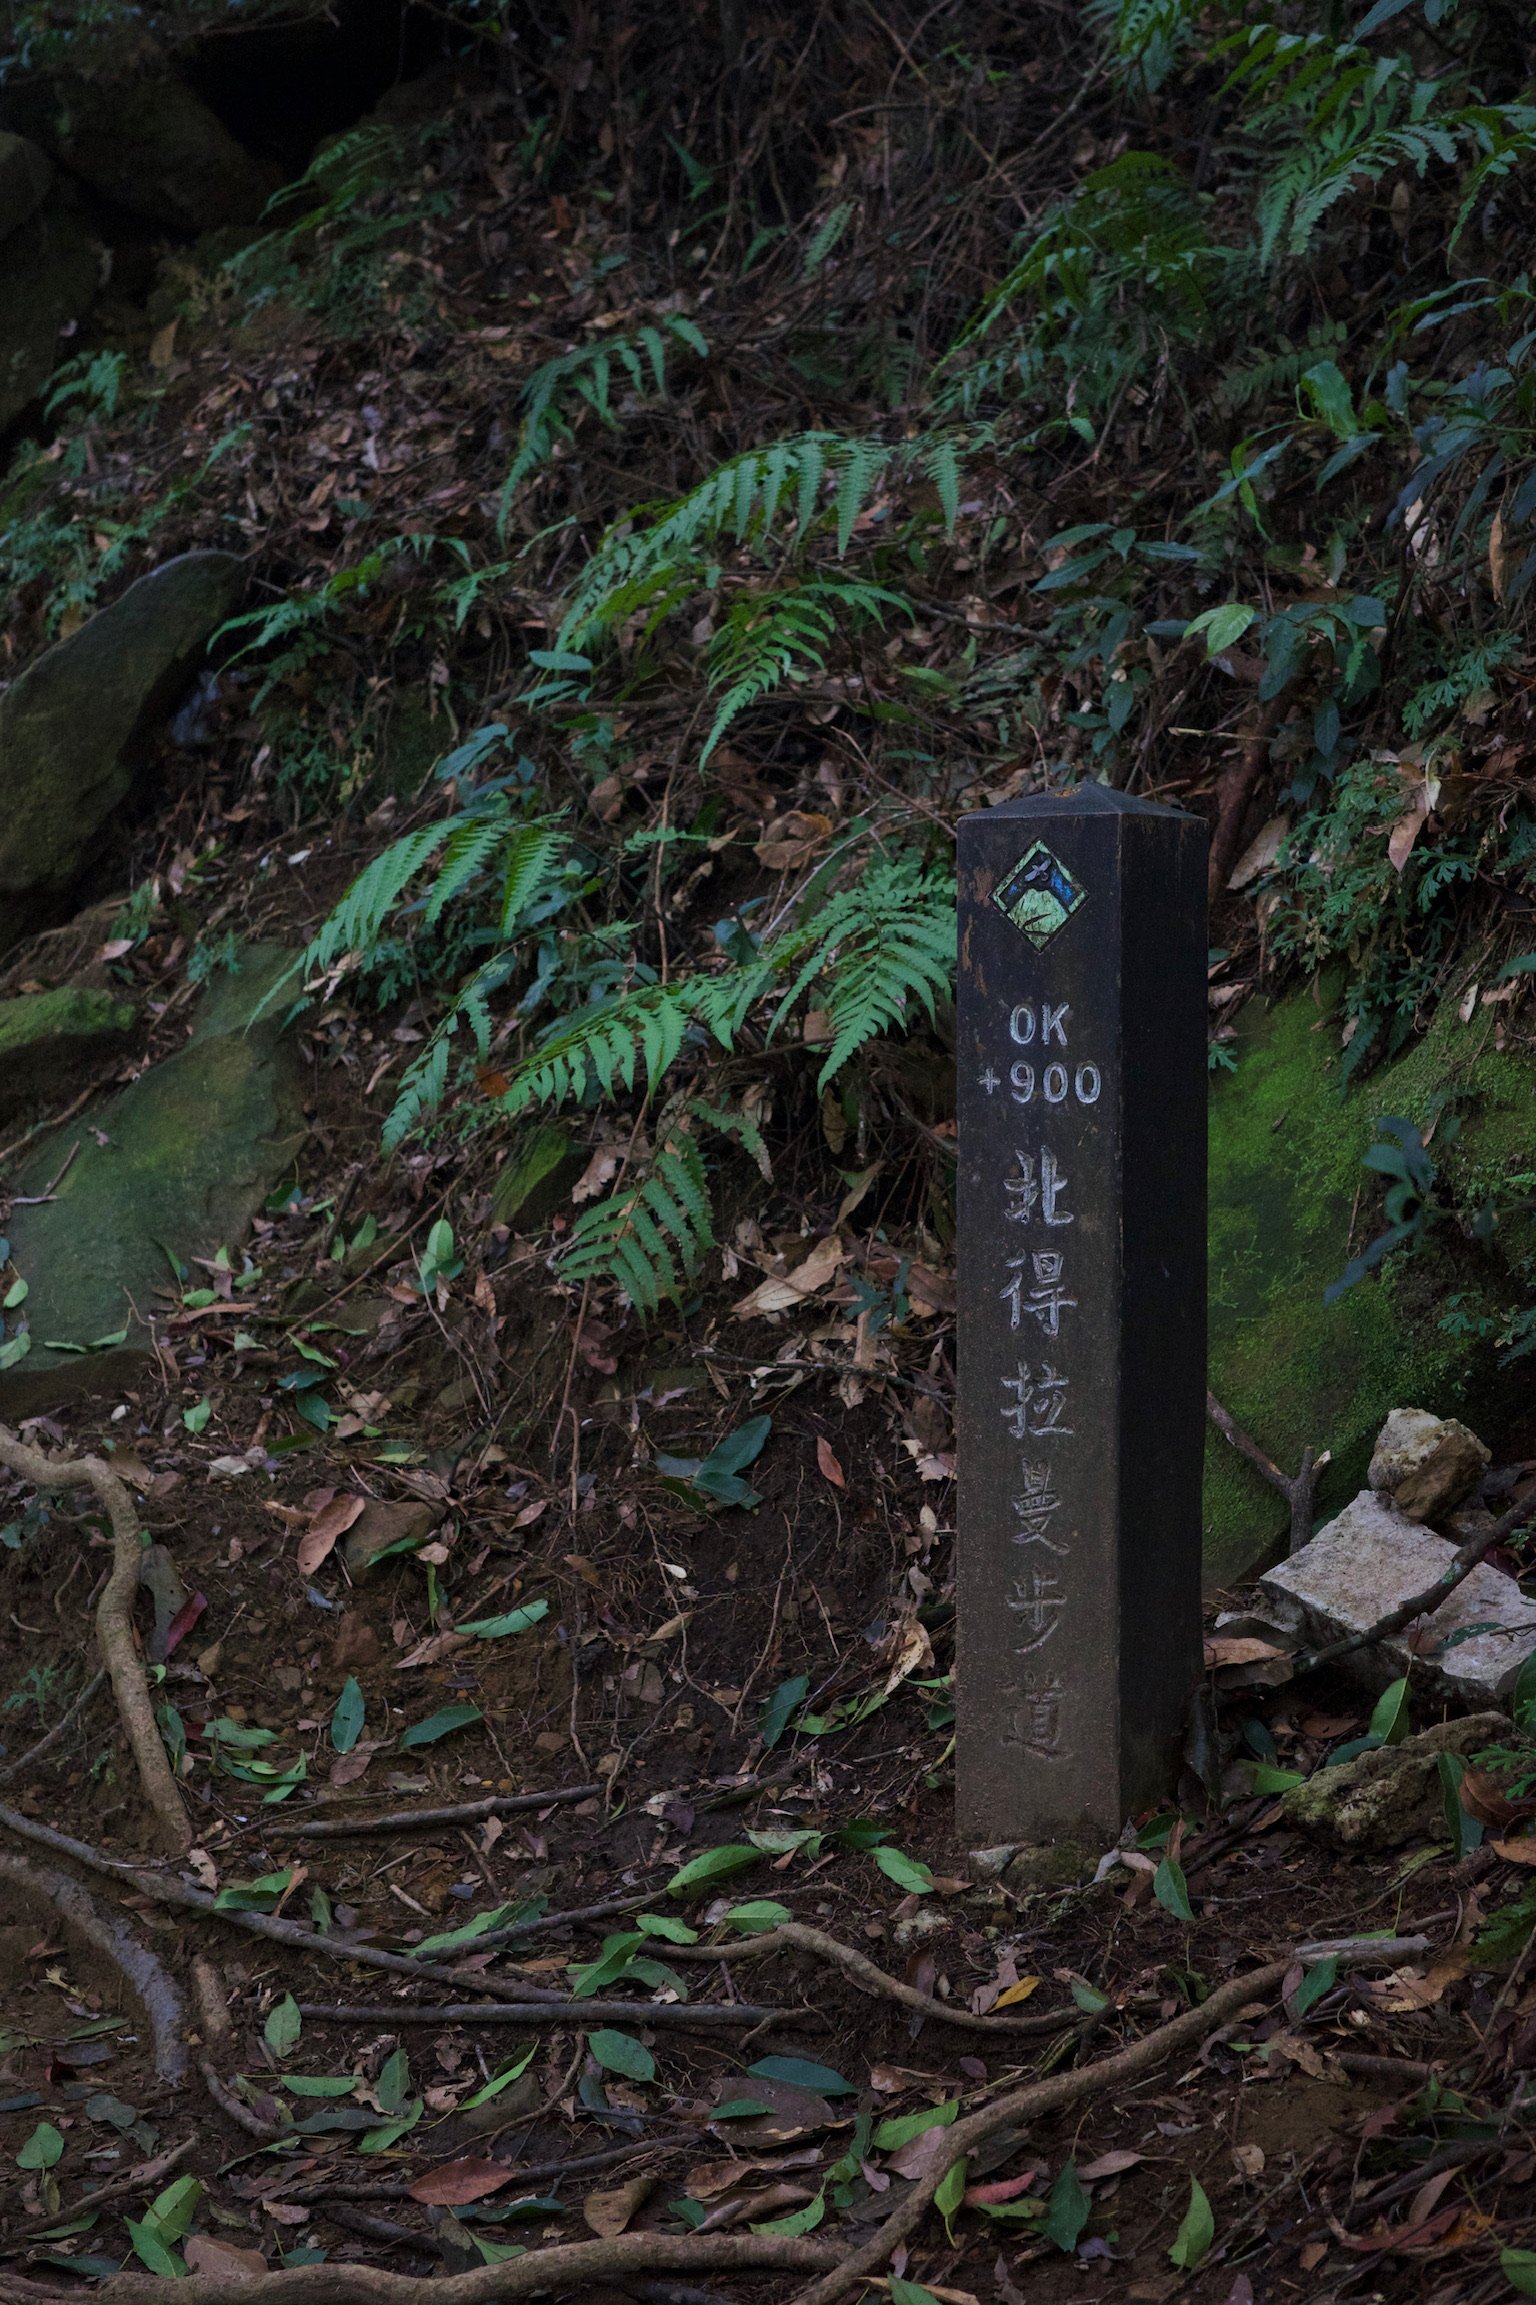 Ptlaman hiking trail sign, reading 0k 900.